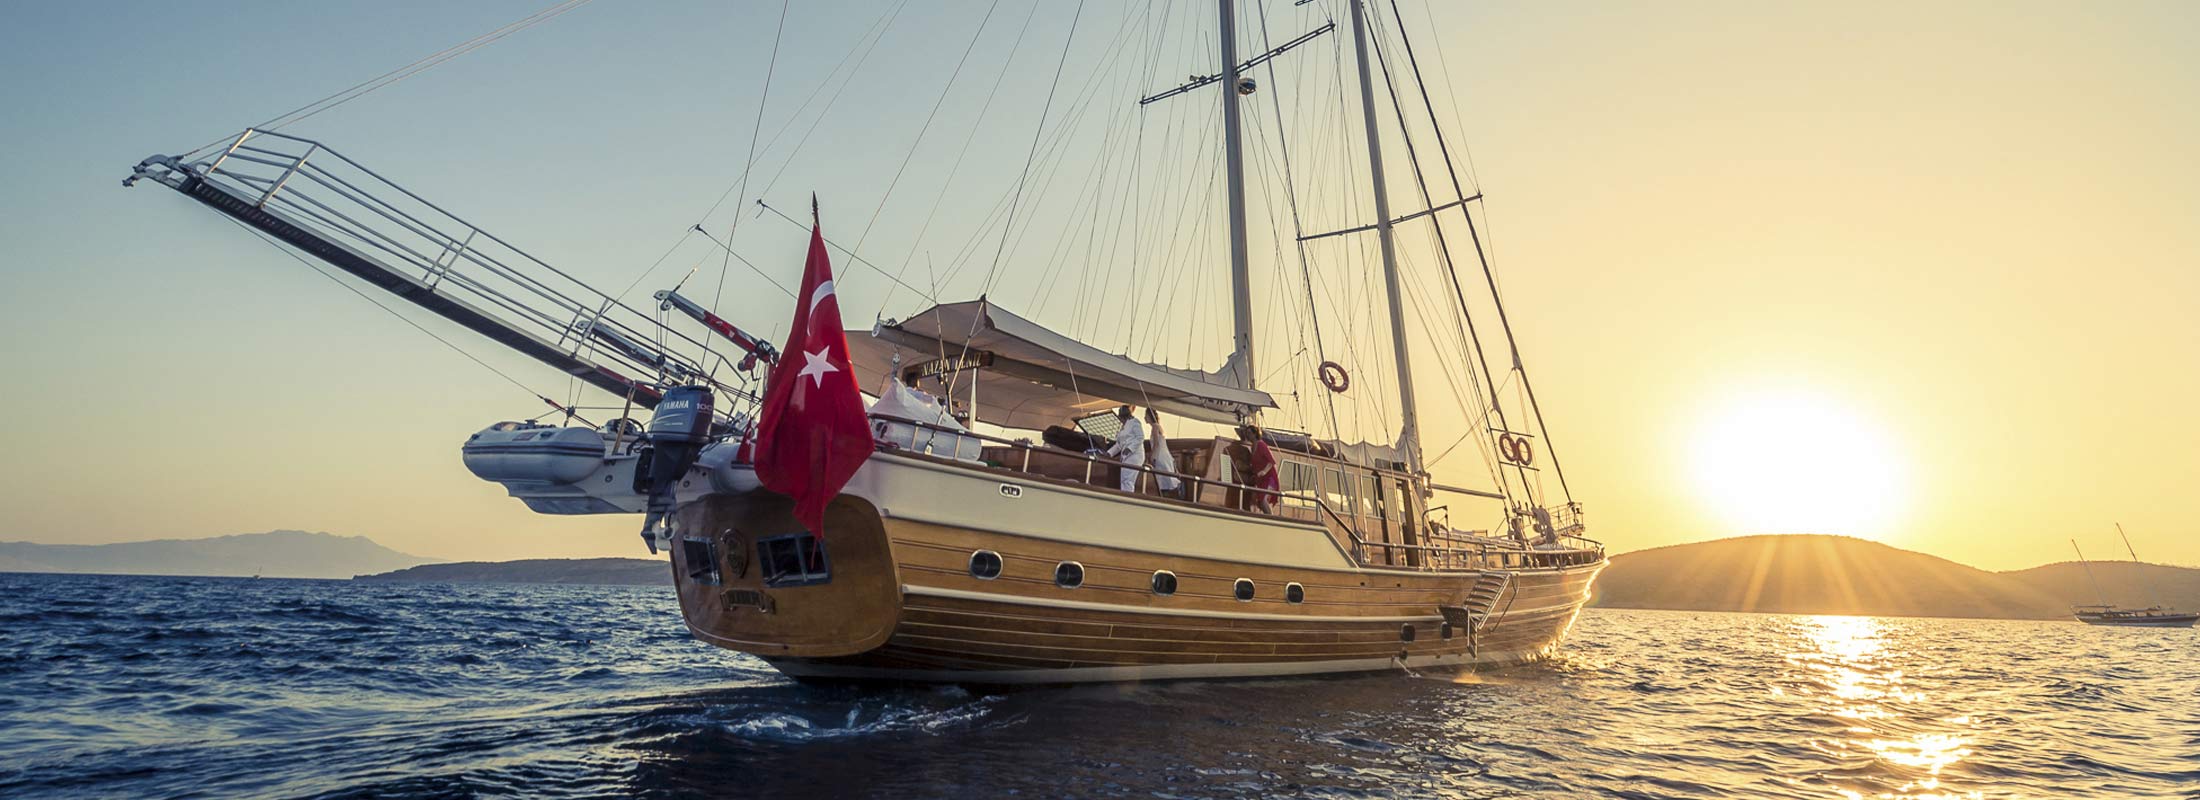 Princess Nazan Deniz Sailing Yacht for Charter Mediterranean slider 2